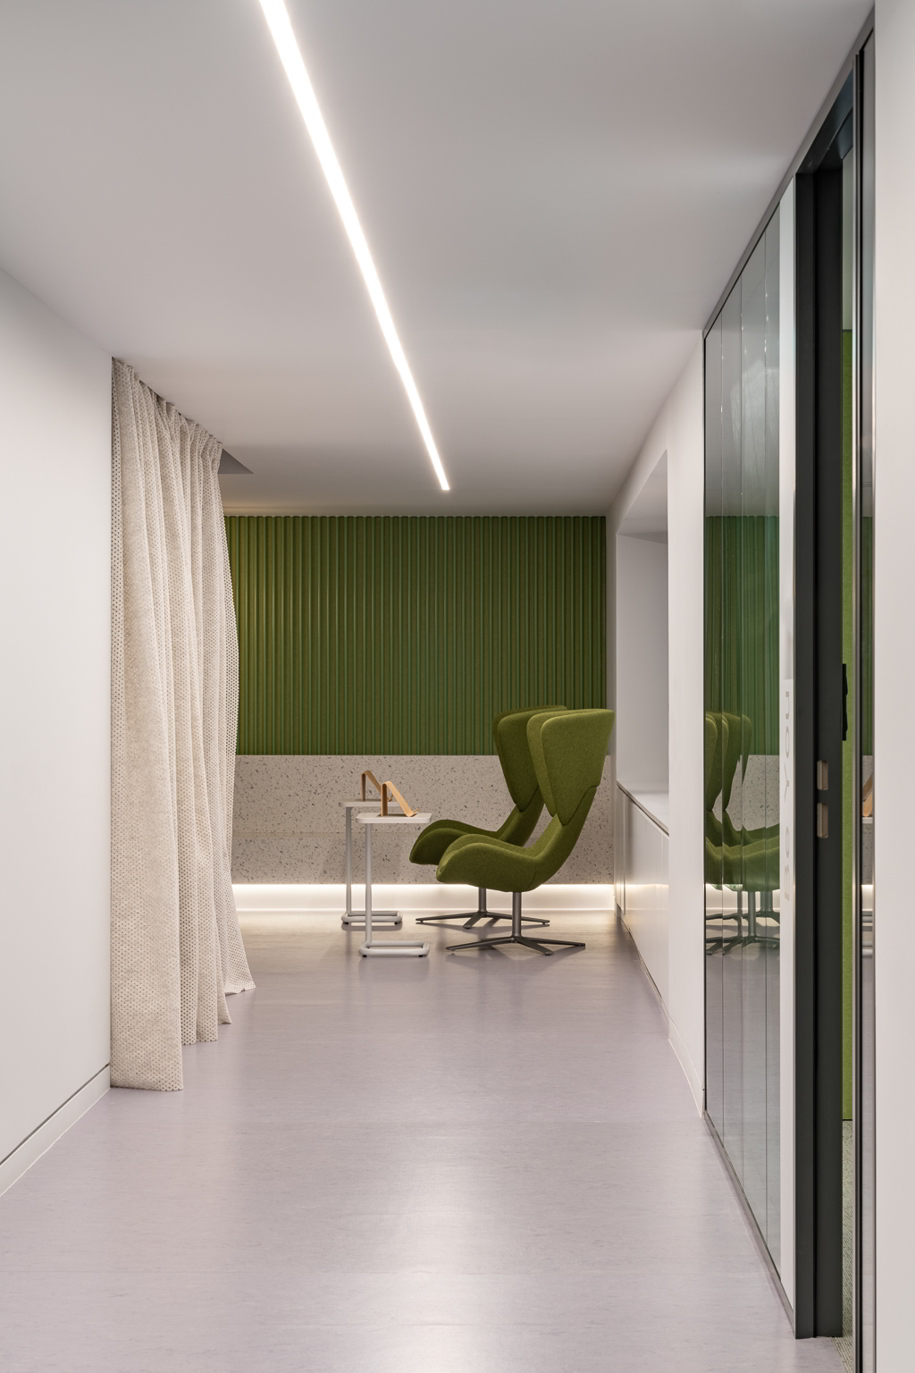 Archisearch Νέα γραφεία Bayer Hellas στο Μαρούσι | Σχεδιασμός φωτισμού από την HUB Lighting & Innovation by Kafkas